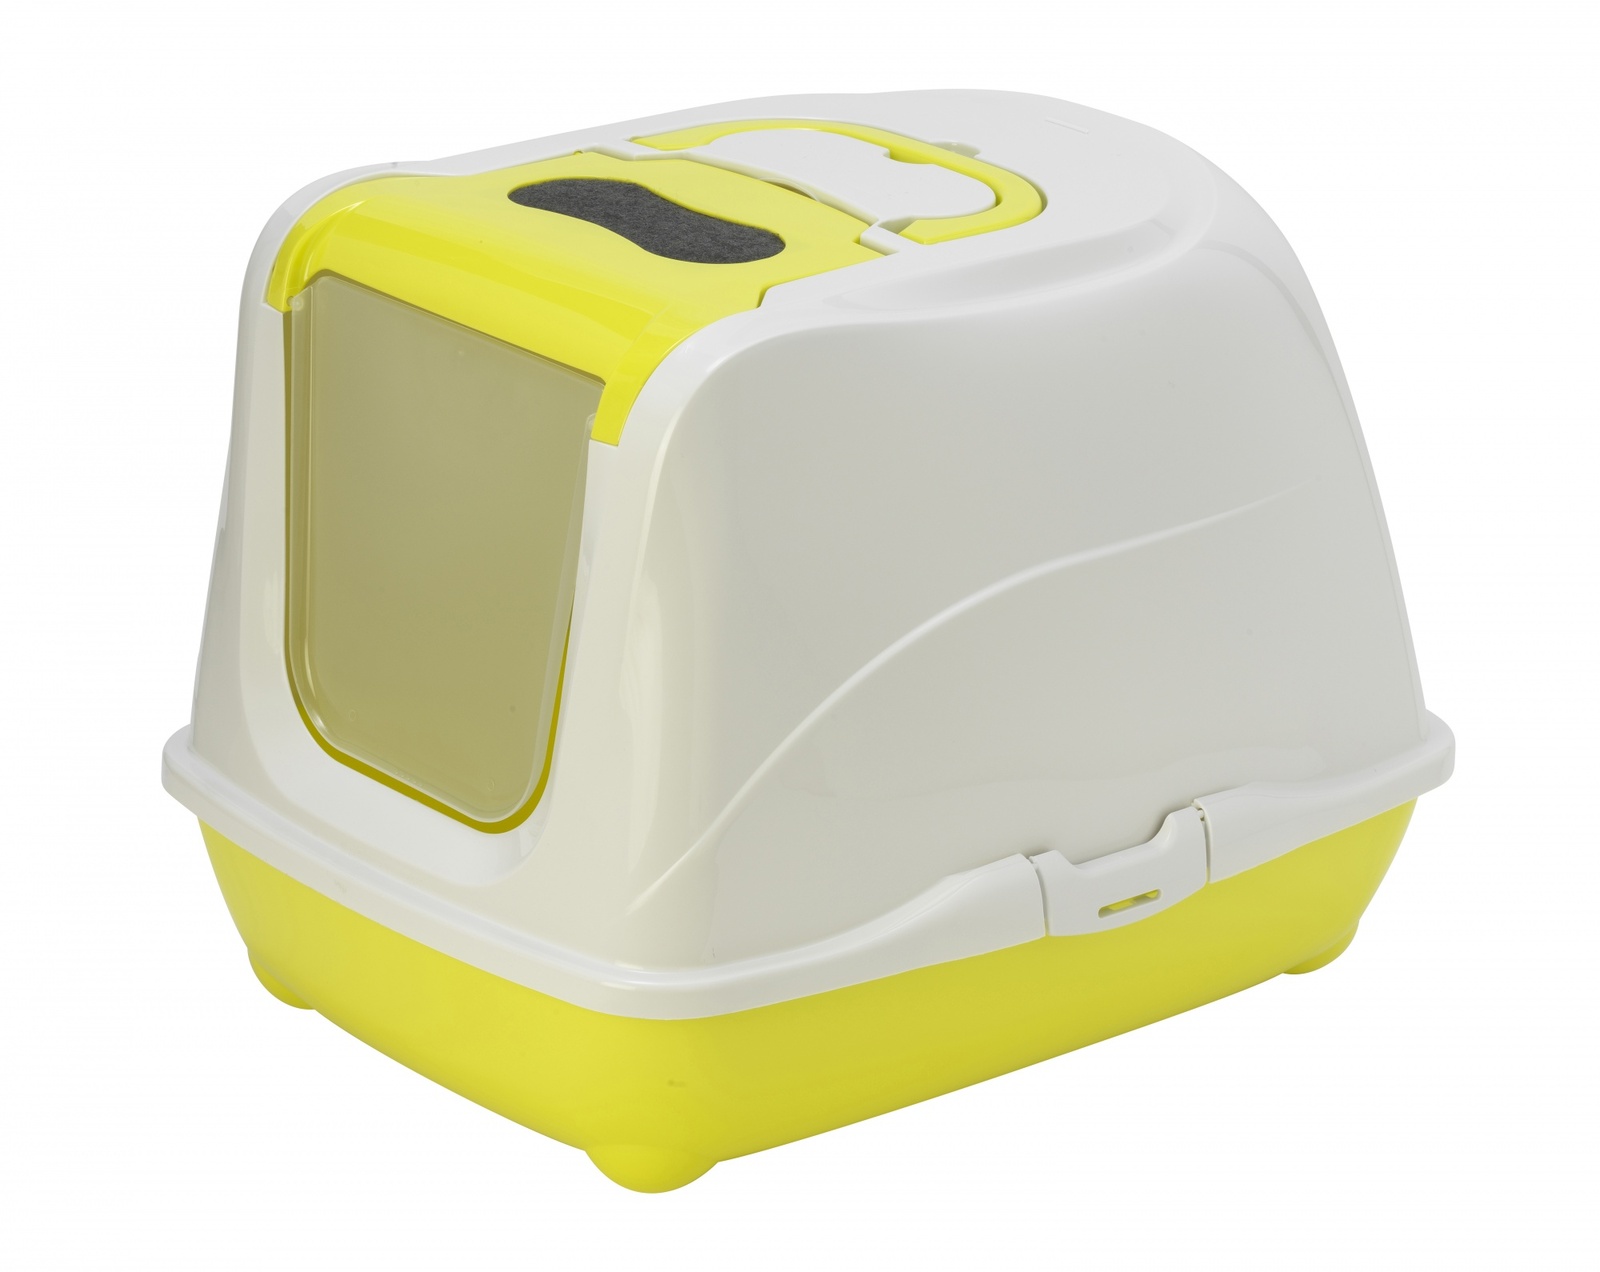 Moderna туалет-домик Jumbo с угольным фильтром, 57х44х41см, лимонно-желтый (1,7 кг)